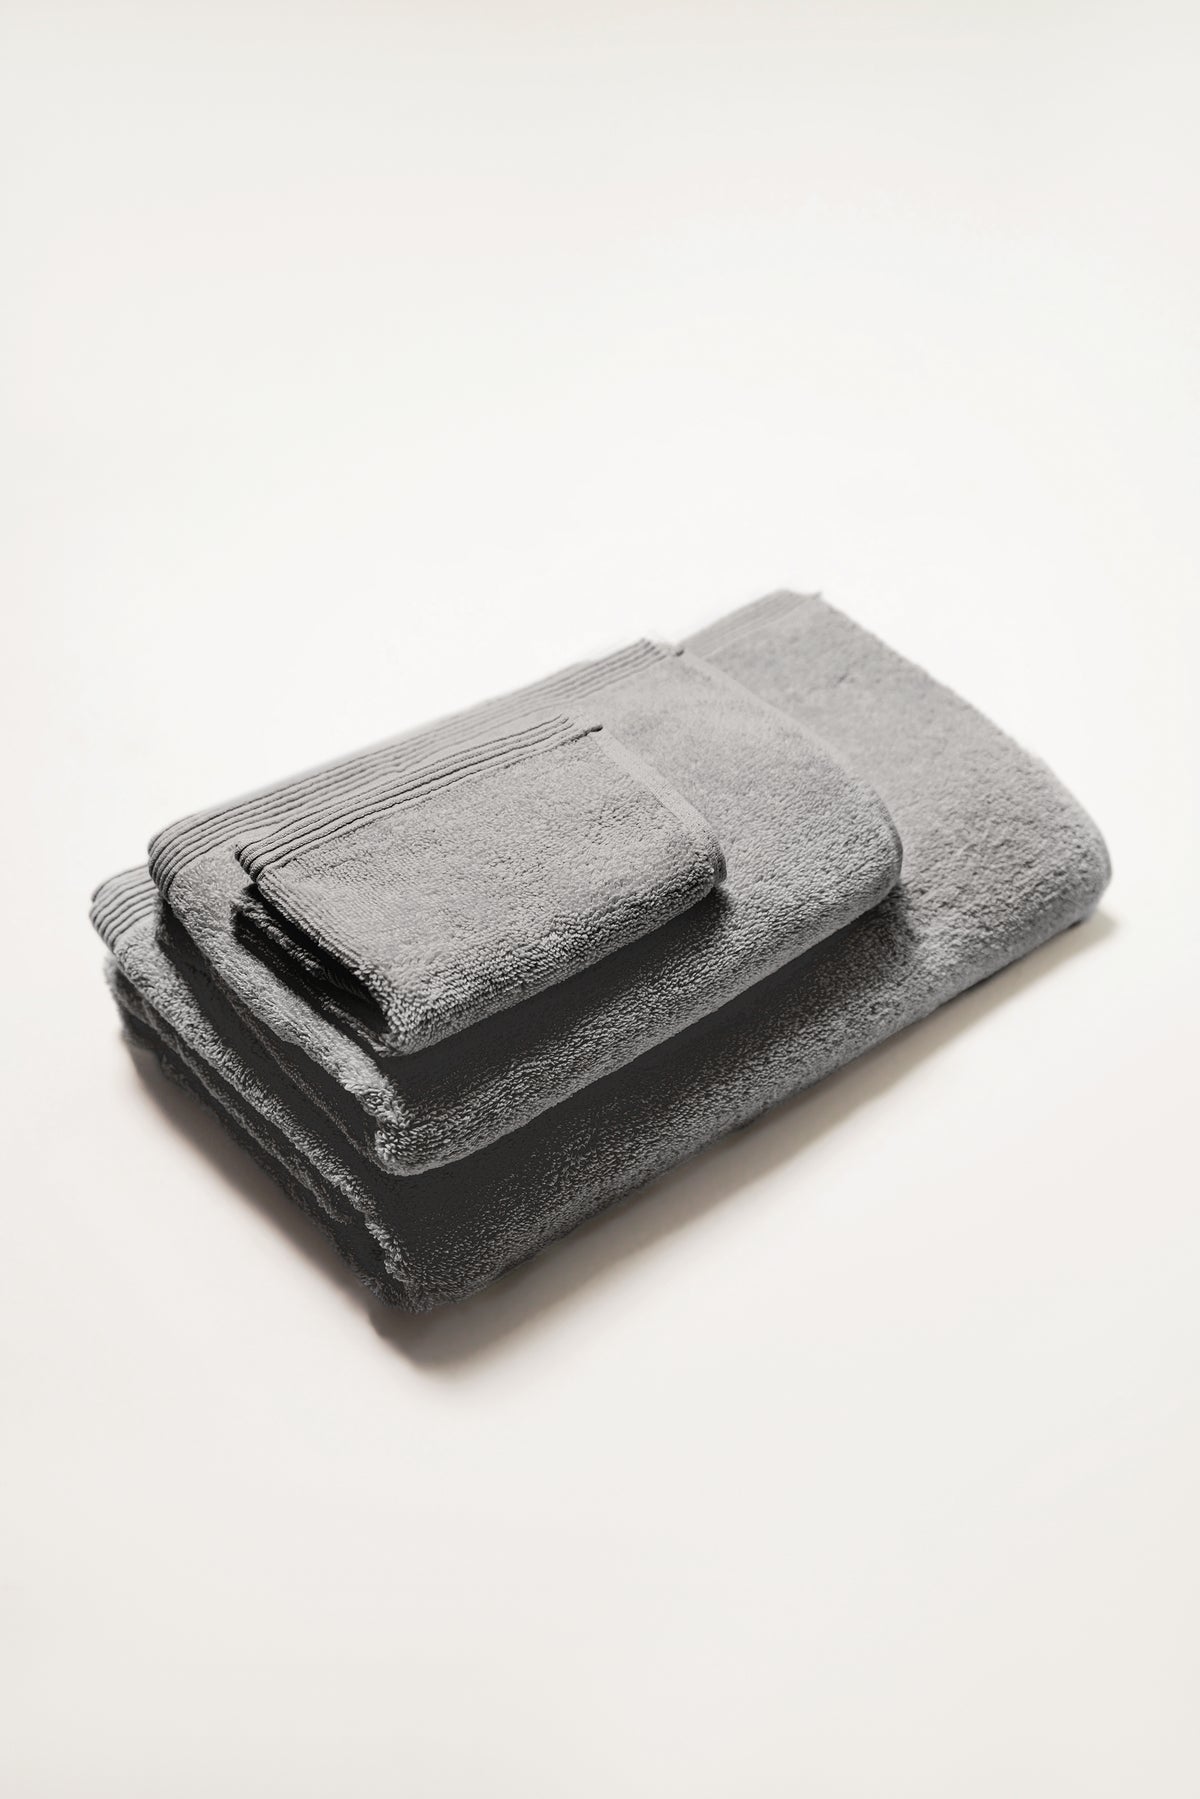 Seine, Bordered Cotton Hand Towel in Stone